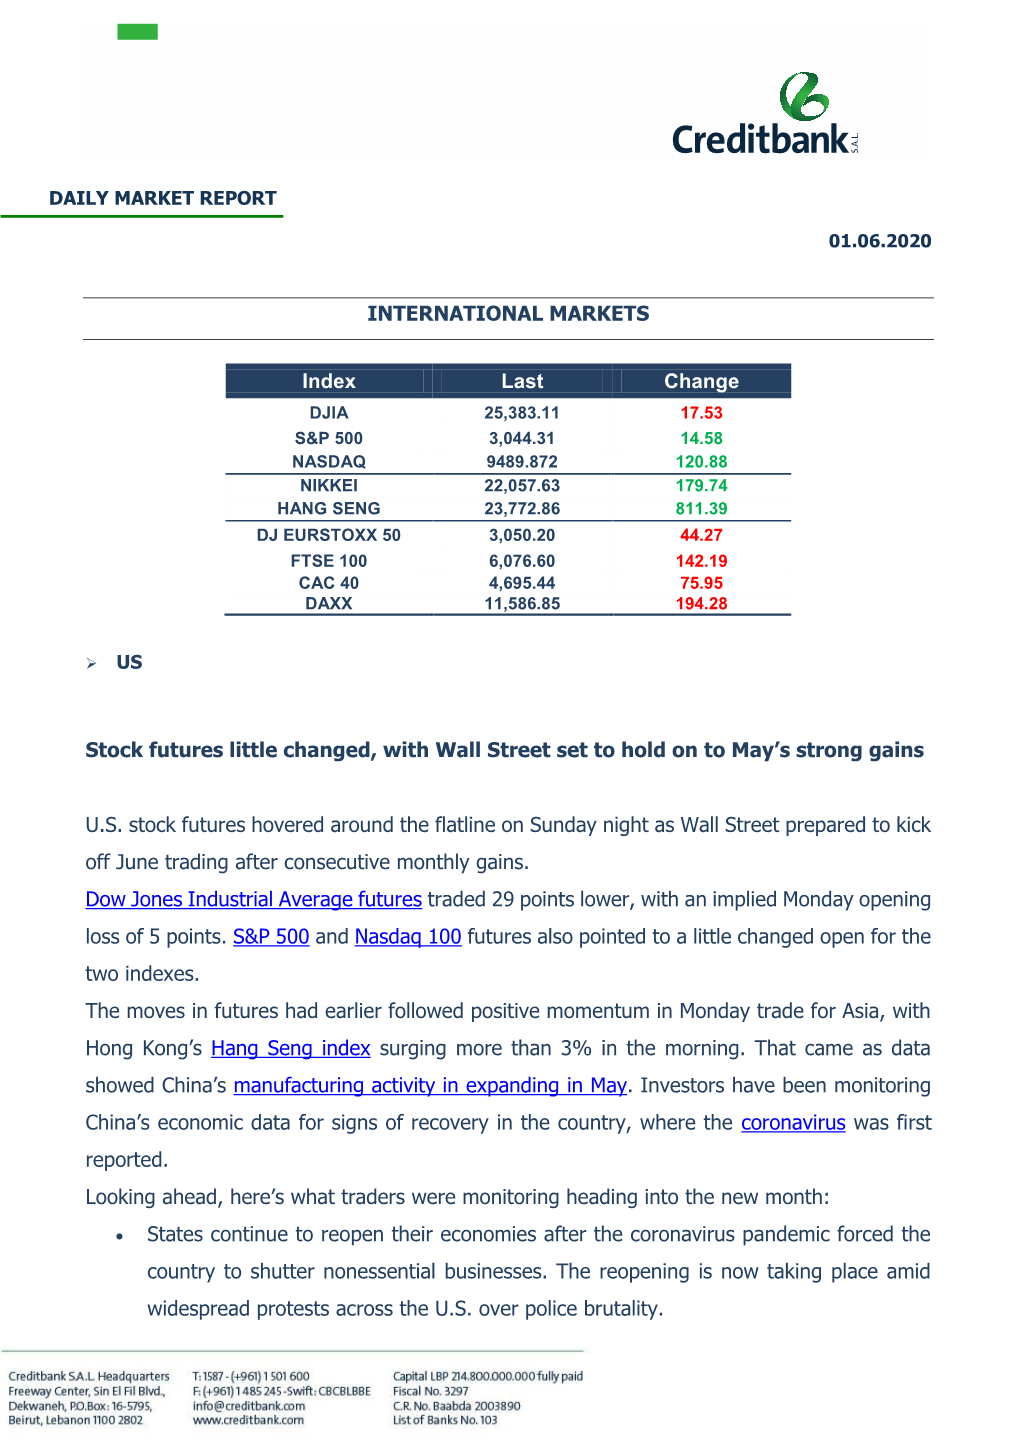 INTERNATIONAL MARKETS Index Last Change Stock Futures Little